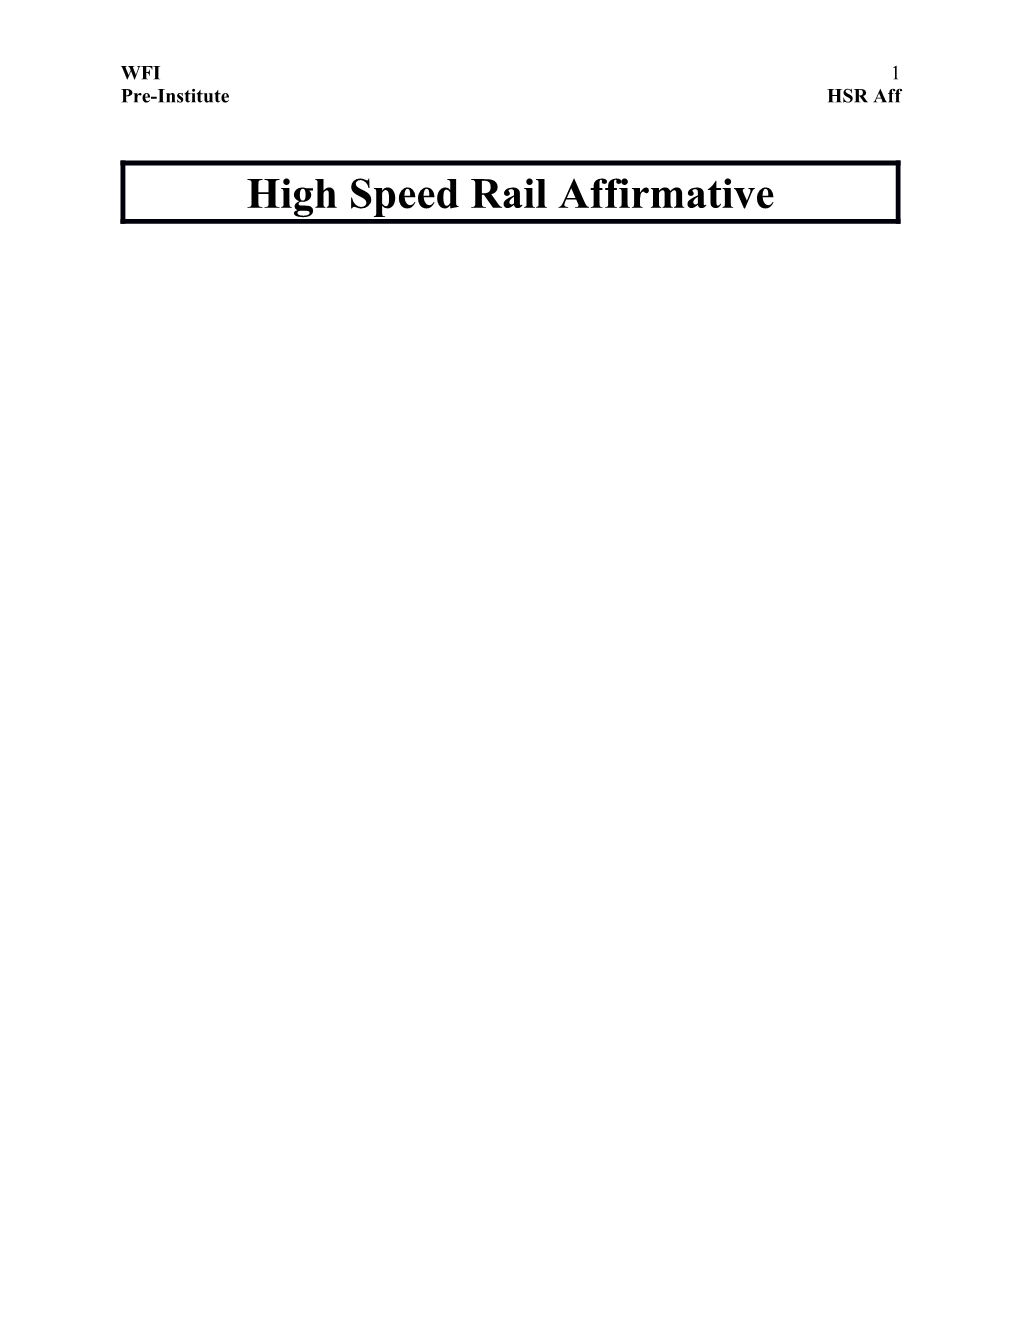 High Speed Rail Affirmative